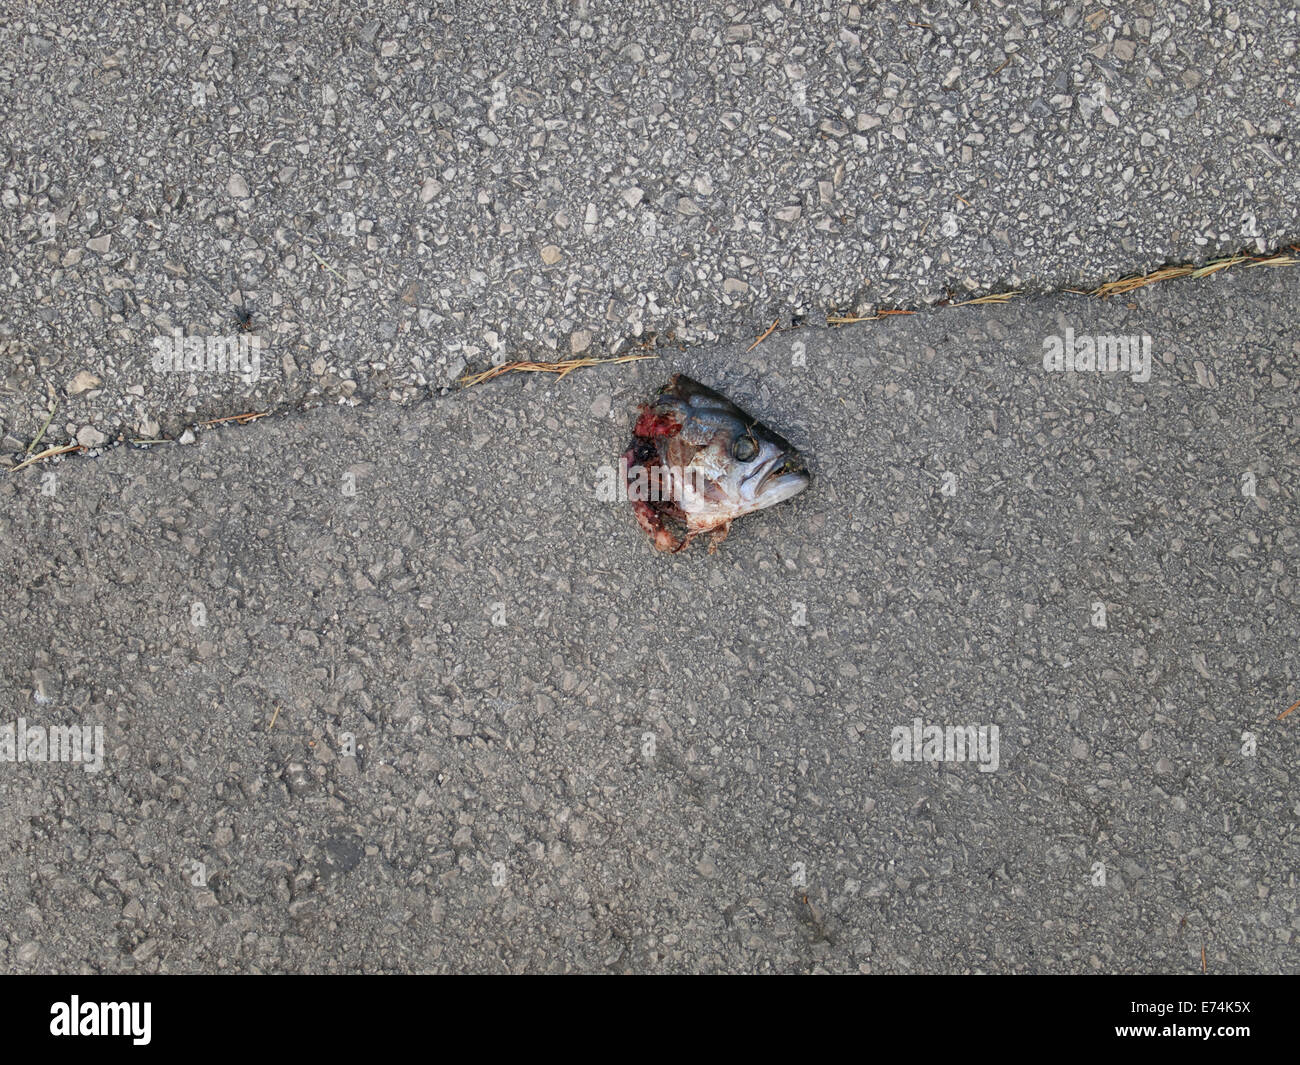 Fish head on a road in Rovinj (IT: Rovigno), Istria, Croatia. Stock Photo